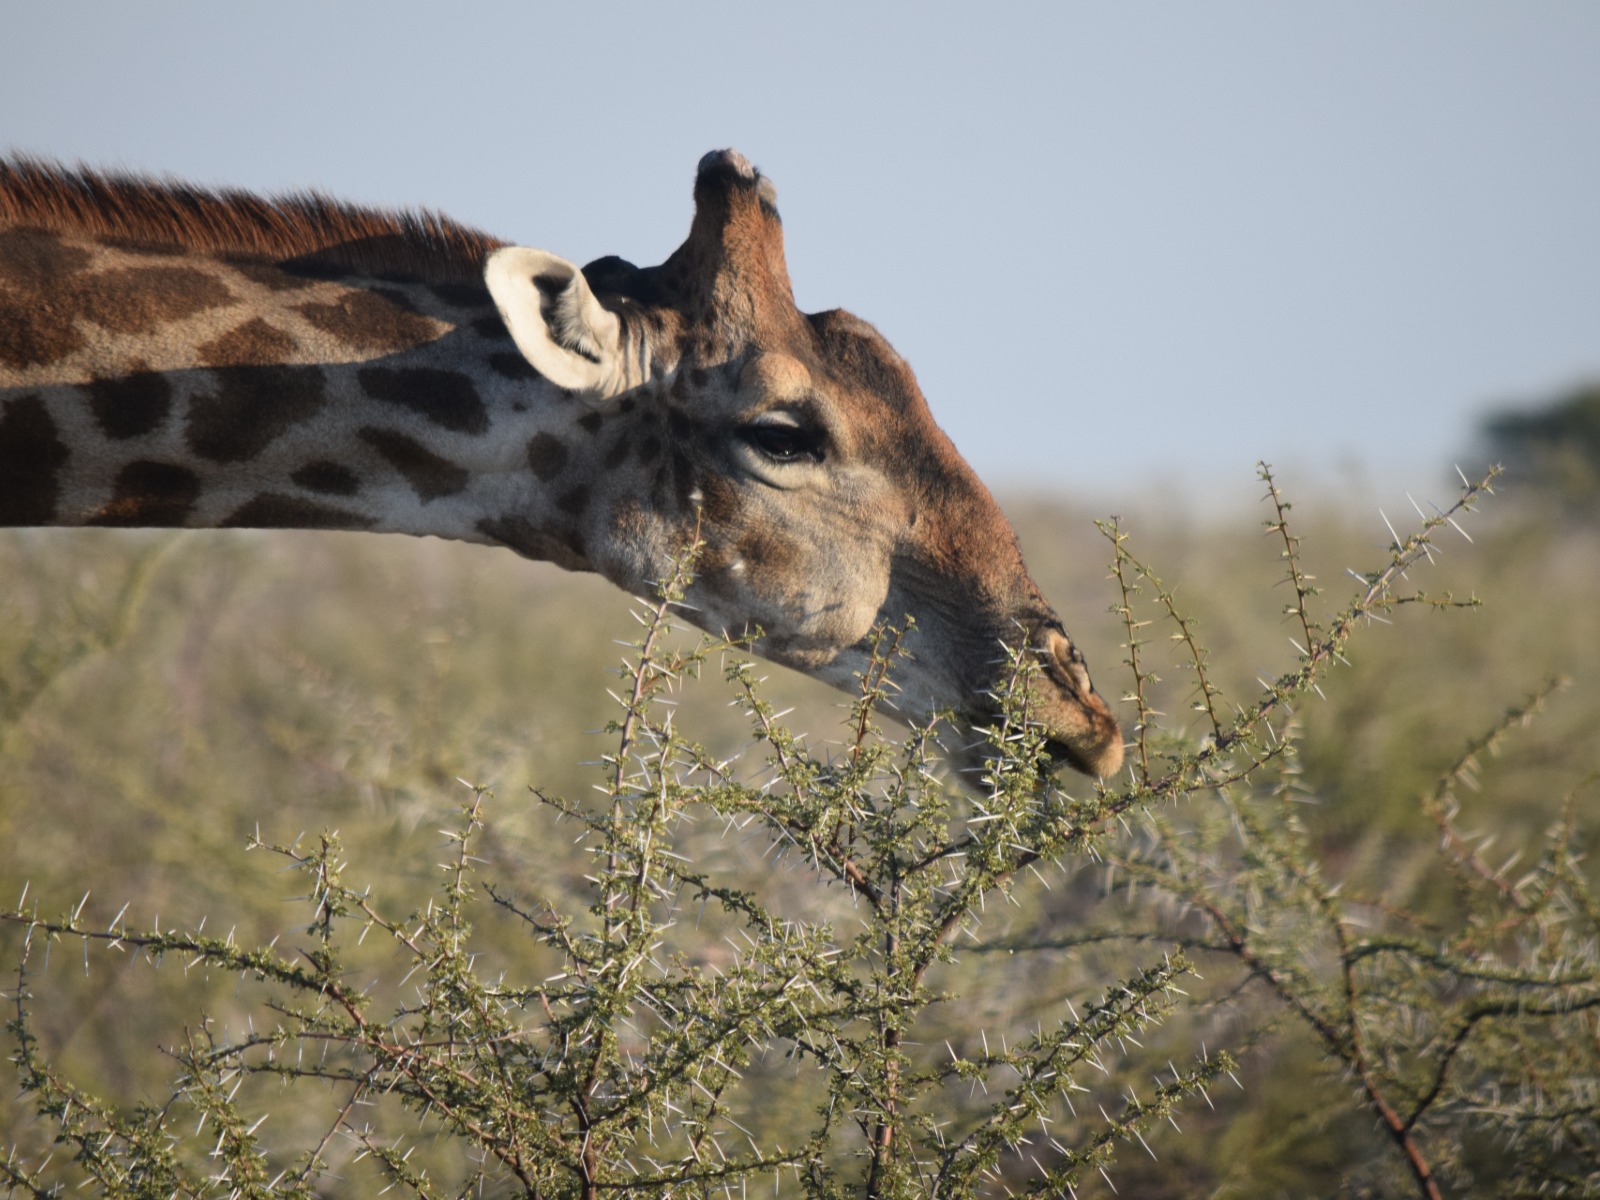 A giraffe eating some thorns